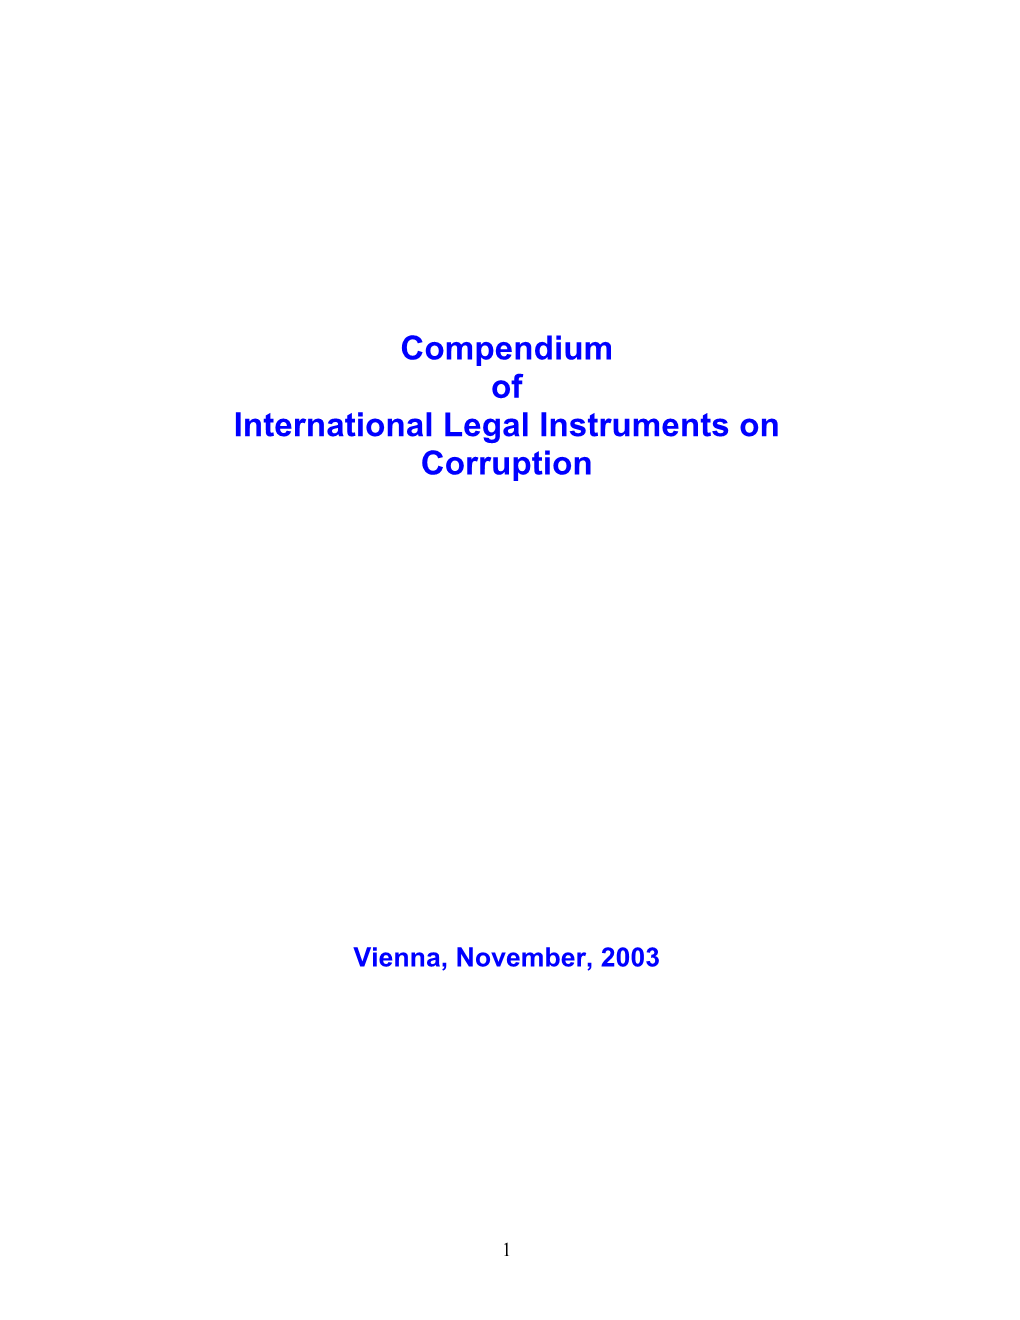 Compendium of International Legal Instruments on Corruption